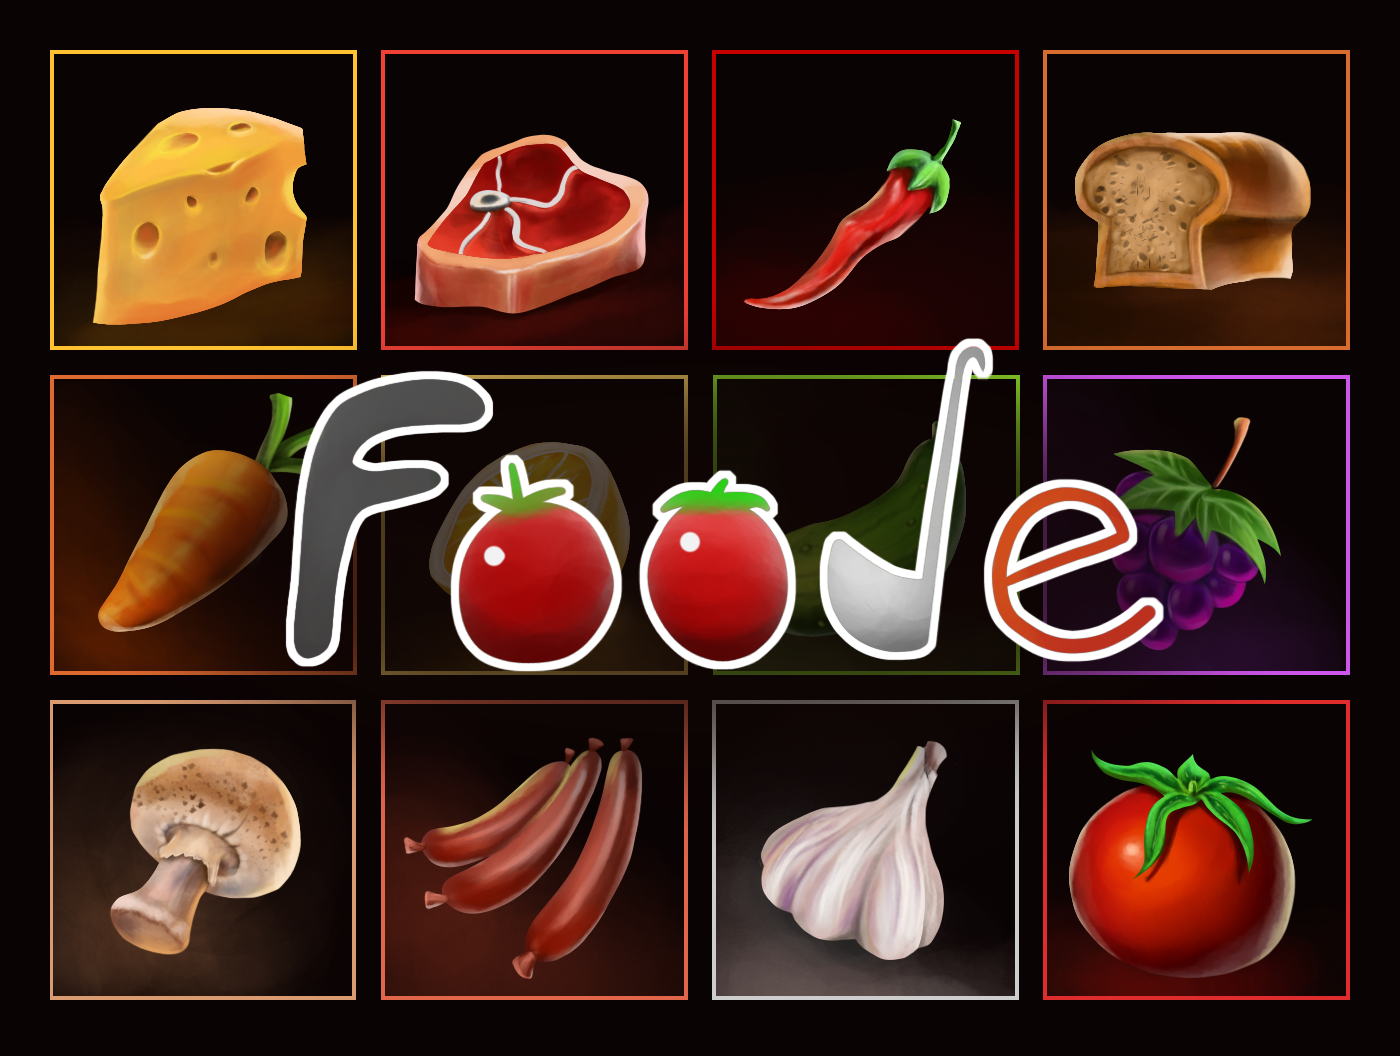 Foode - Memory Card Flipping game